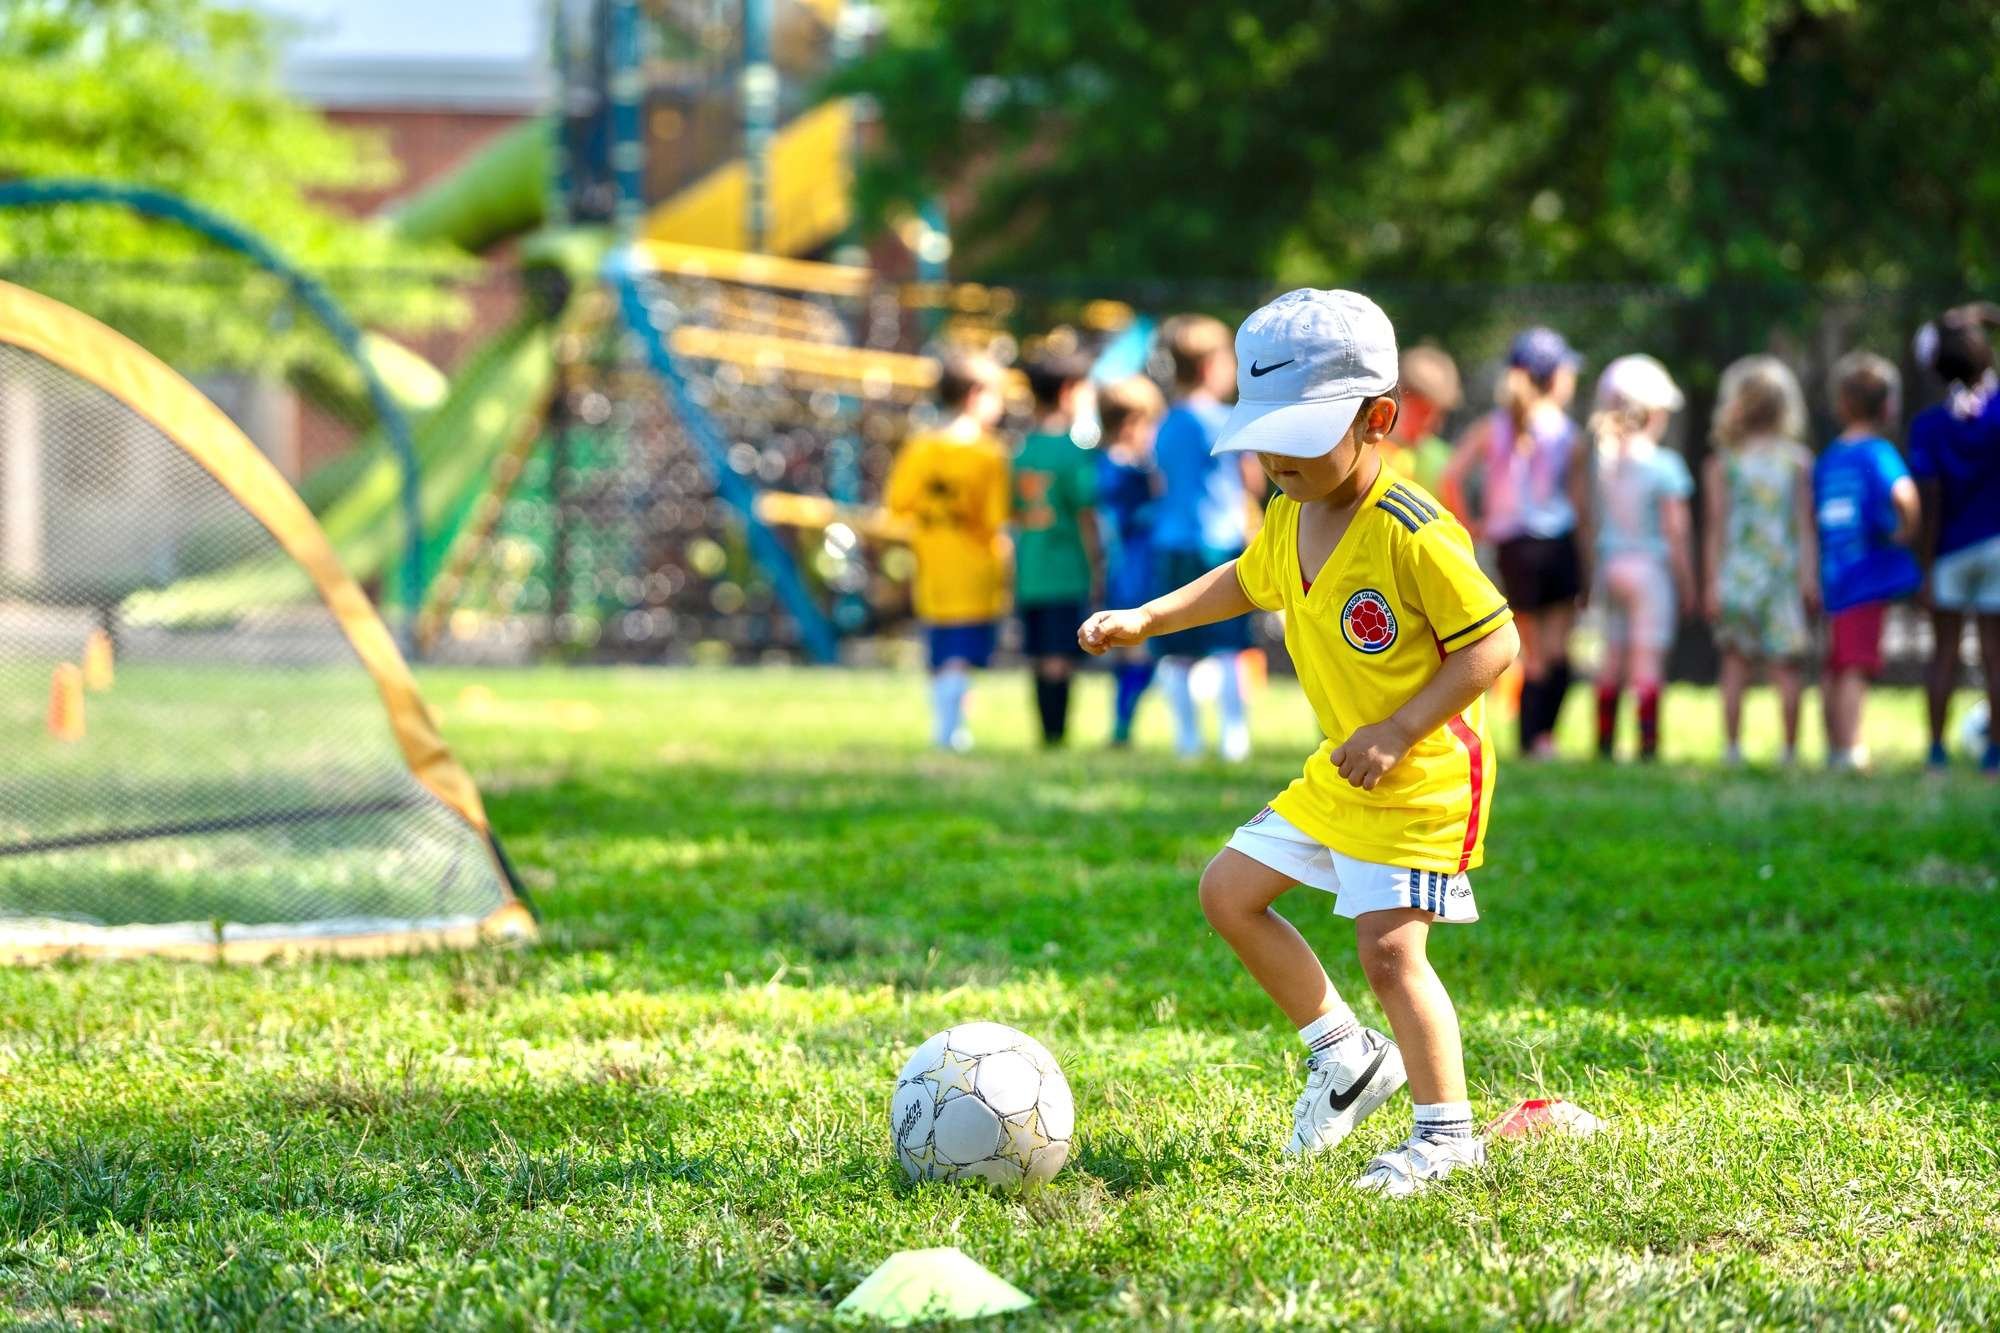 Dc-way-soccer-club-for-kids-in-washington-dc-summer-camp-at-tyler-elementary-school- 0278.jpg